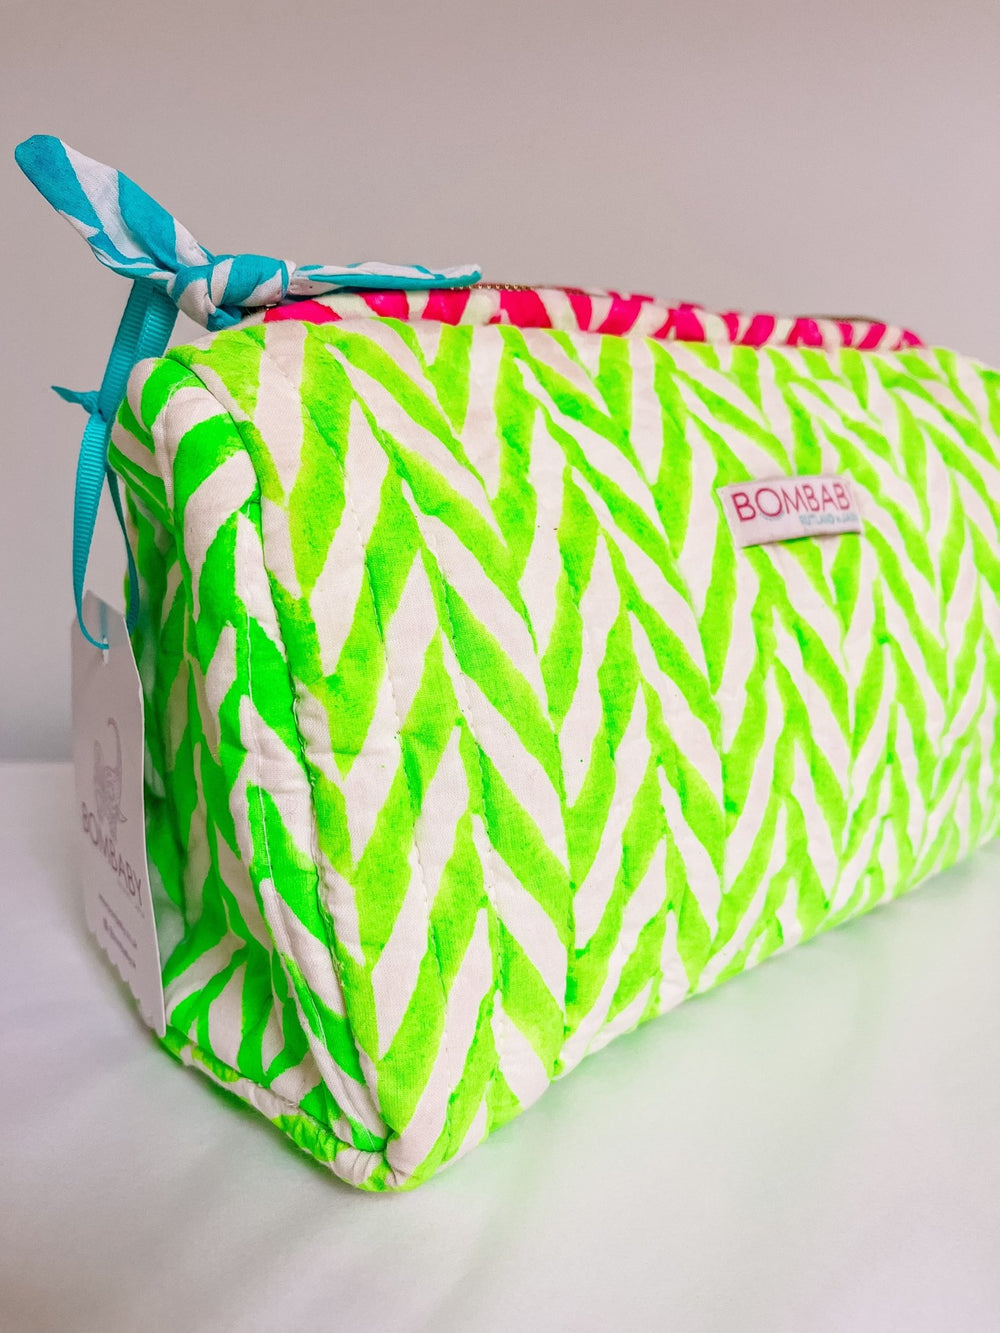 Handmade Block Print Quilted Wash Bag | Neon Green - Bombaby